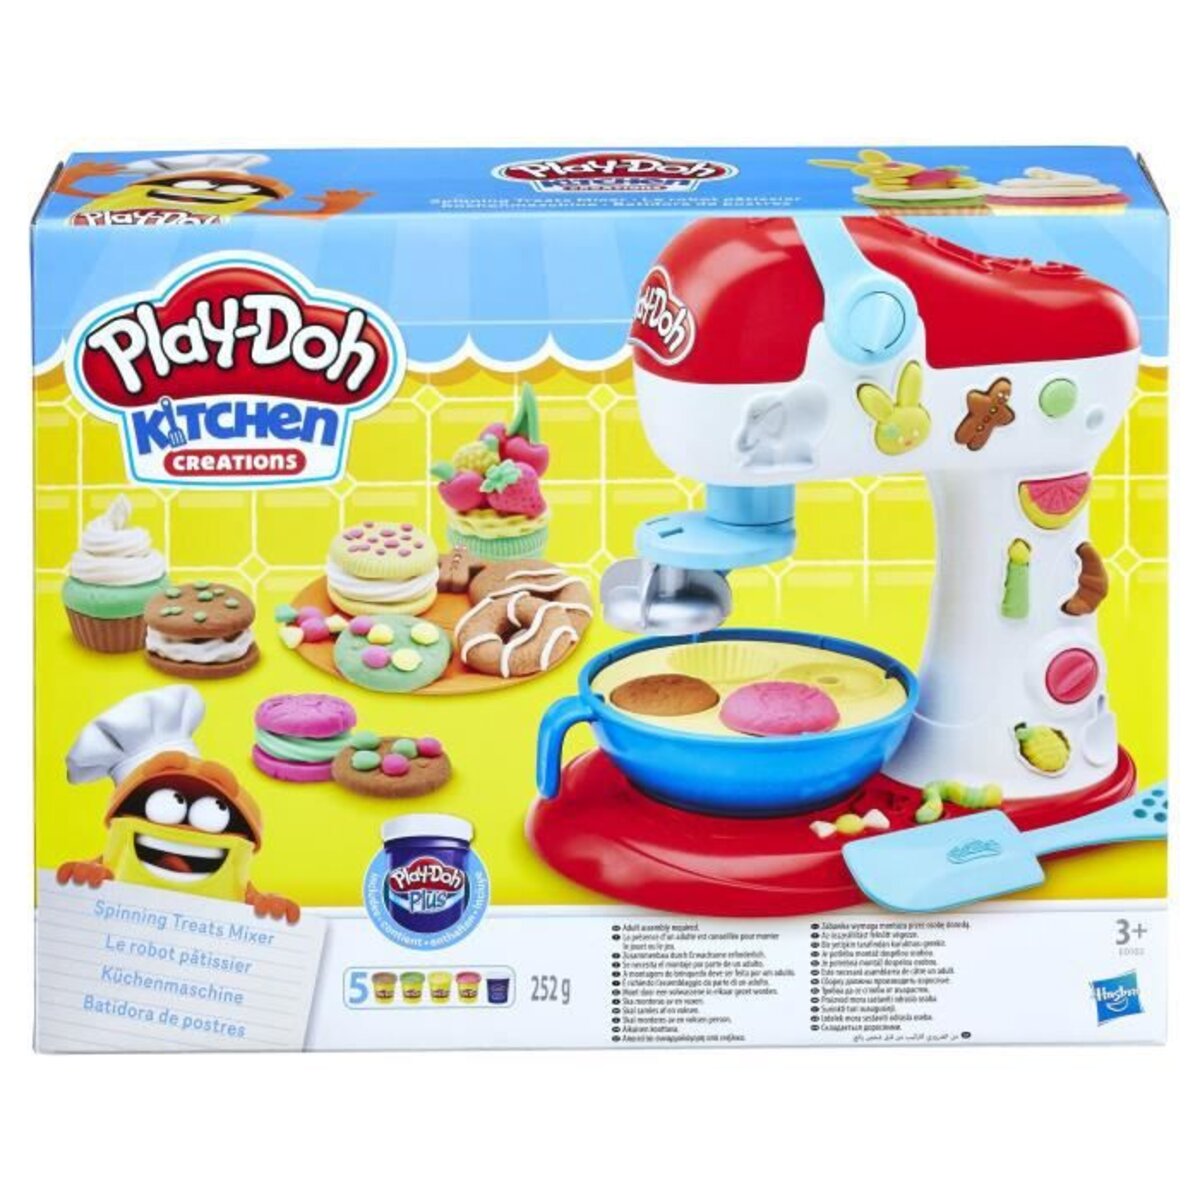 Play-doh kitchen – pate a modeler - le robot pâtissier - La Poste